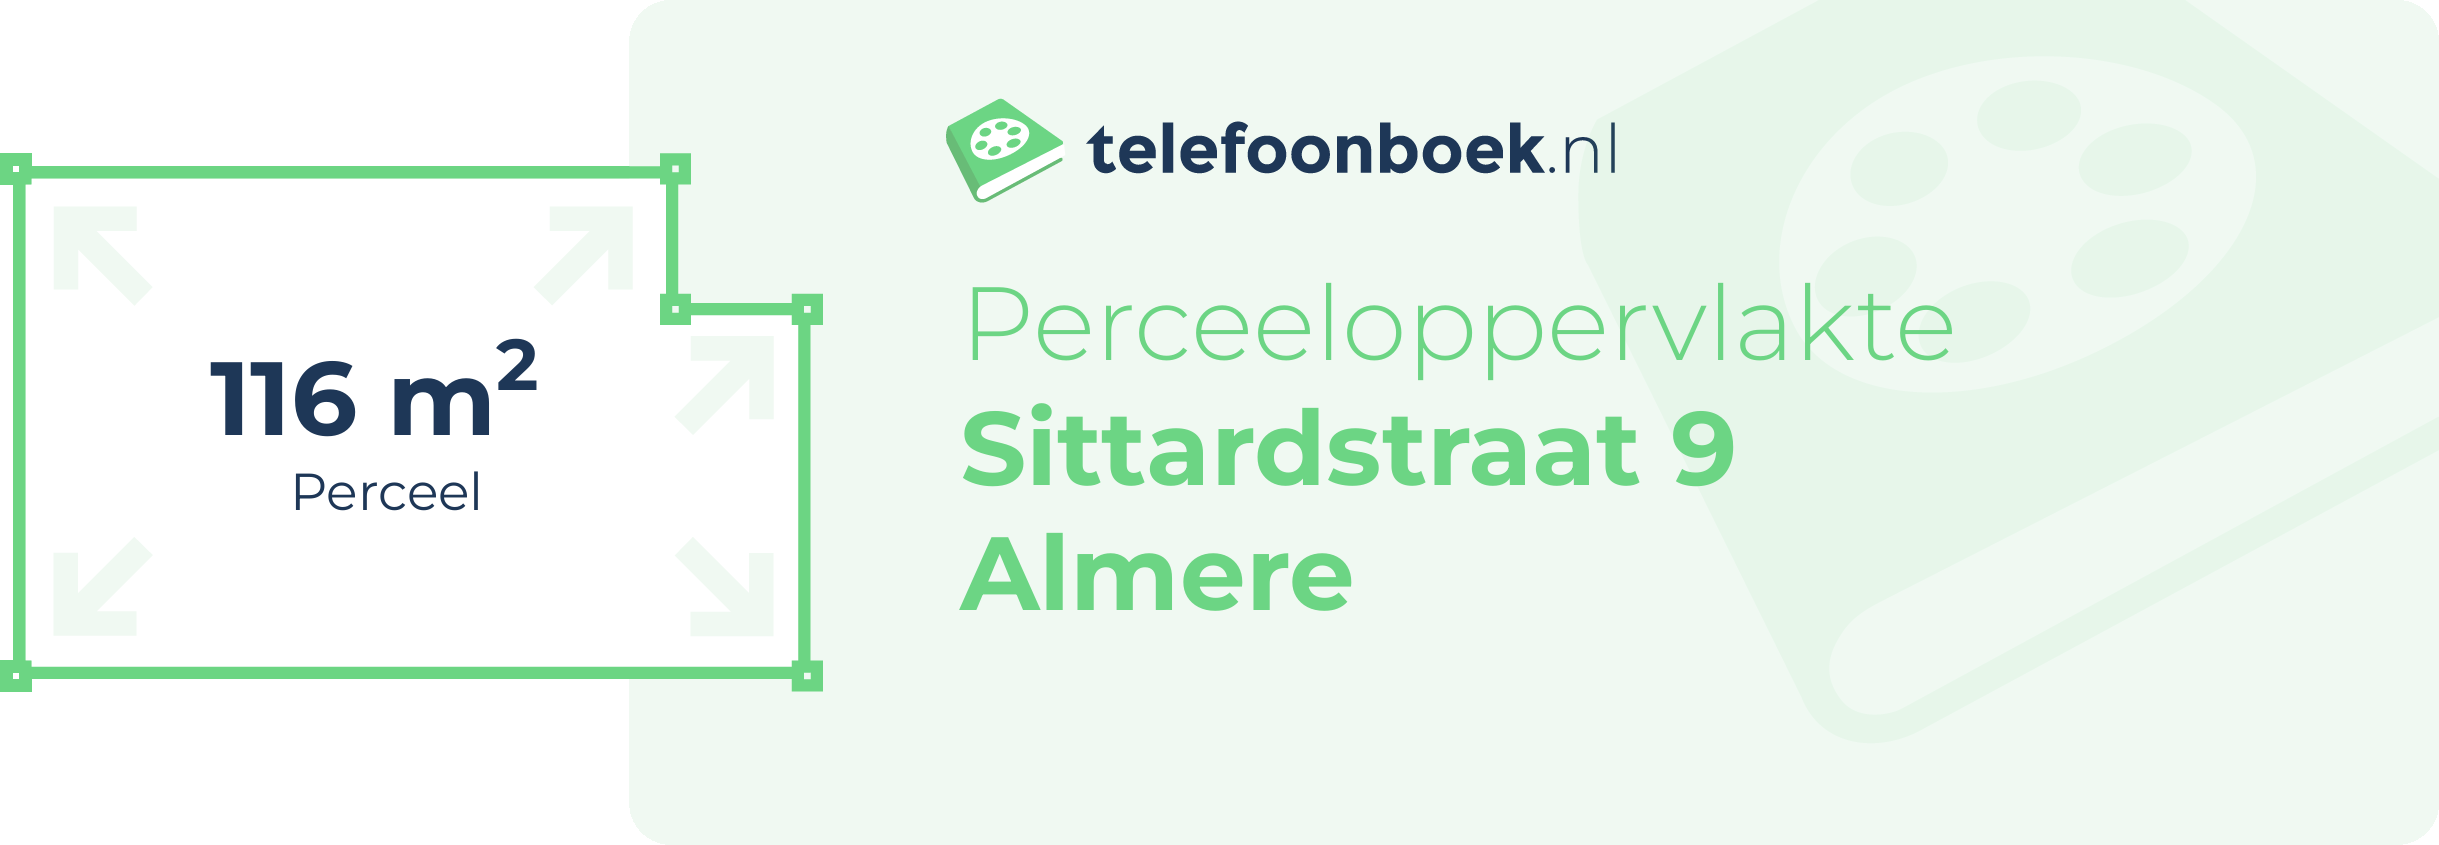 Perceeloppervlakte Sittardstraat 9 Almere